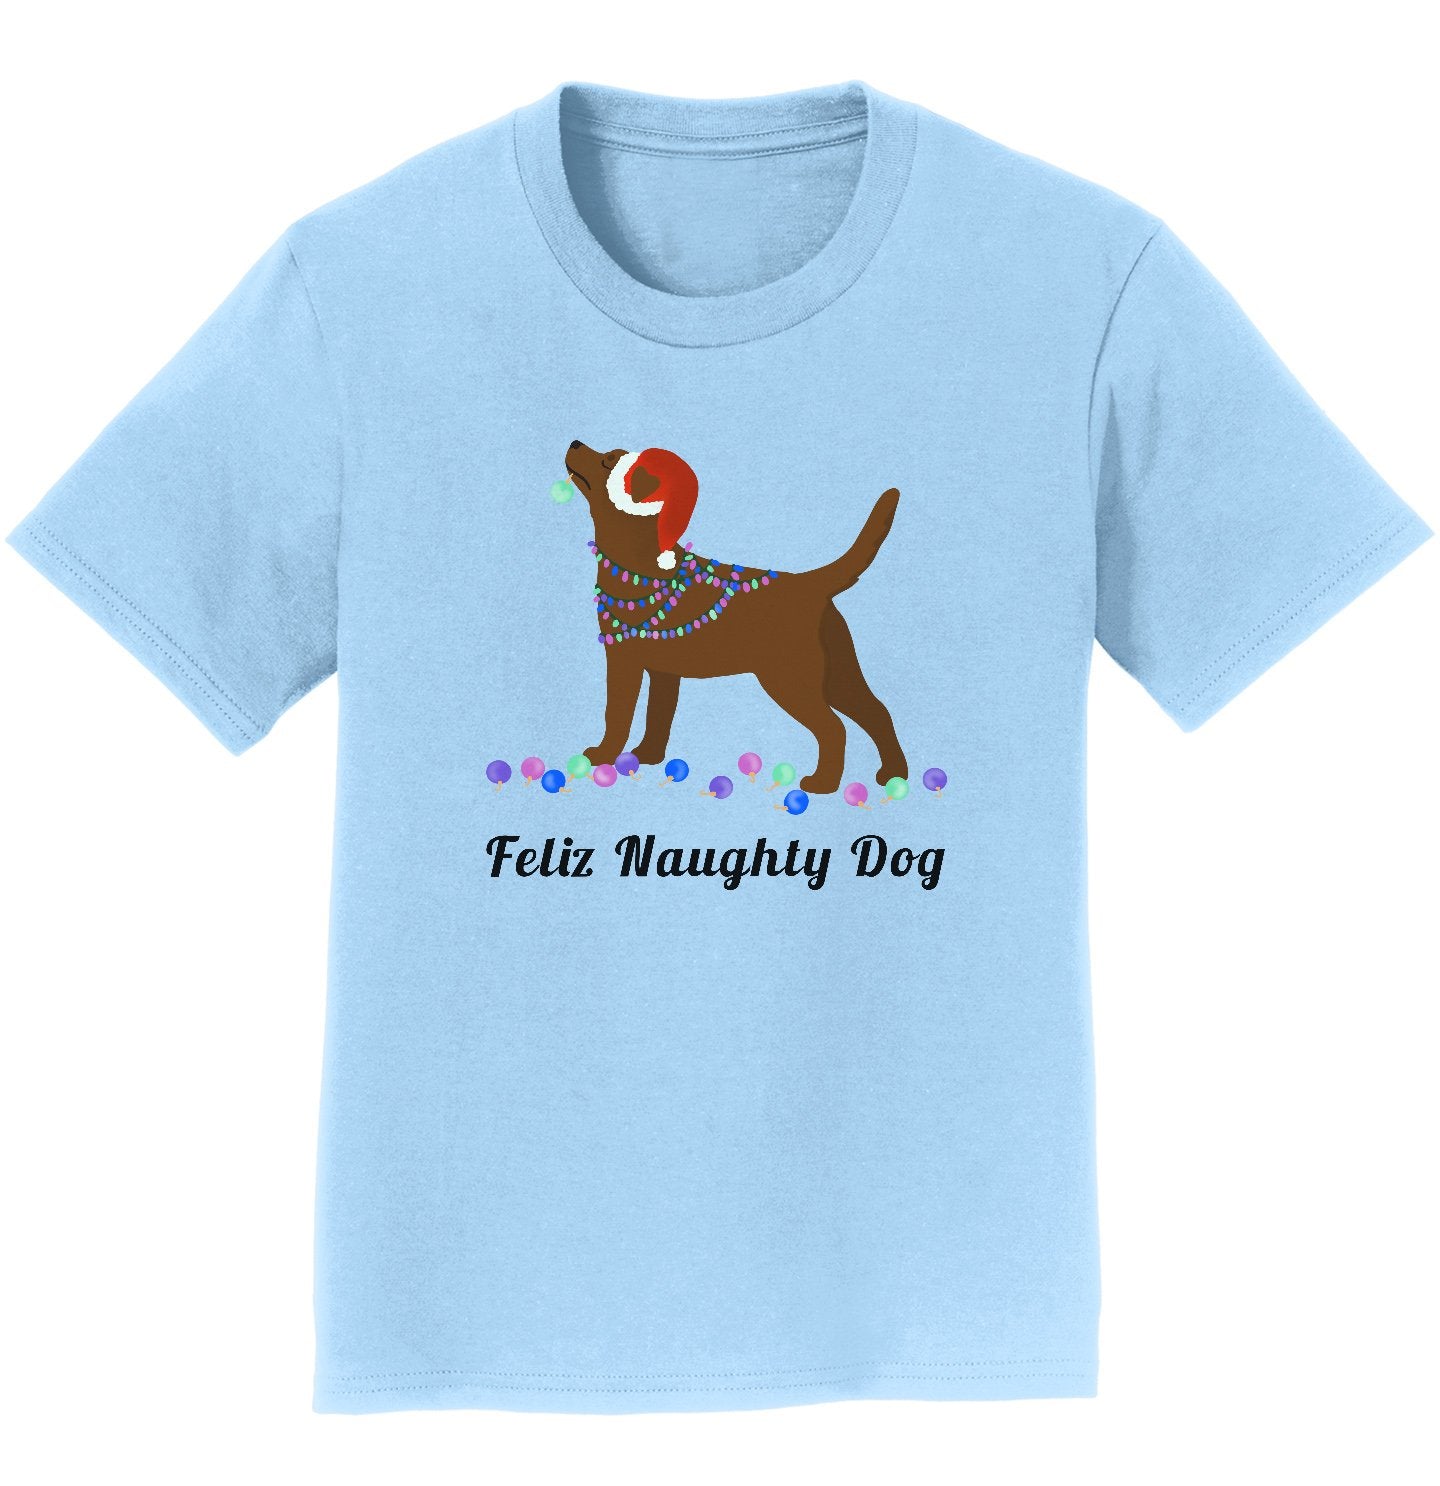 Feliz Naughty Dog Chocolate Lab - Kids' Unisex T-Shirt